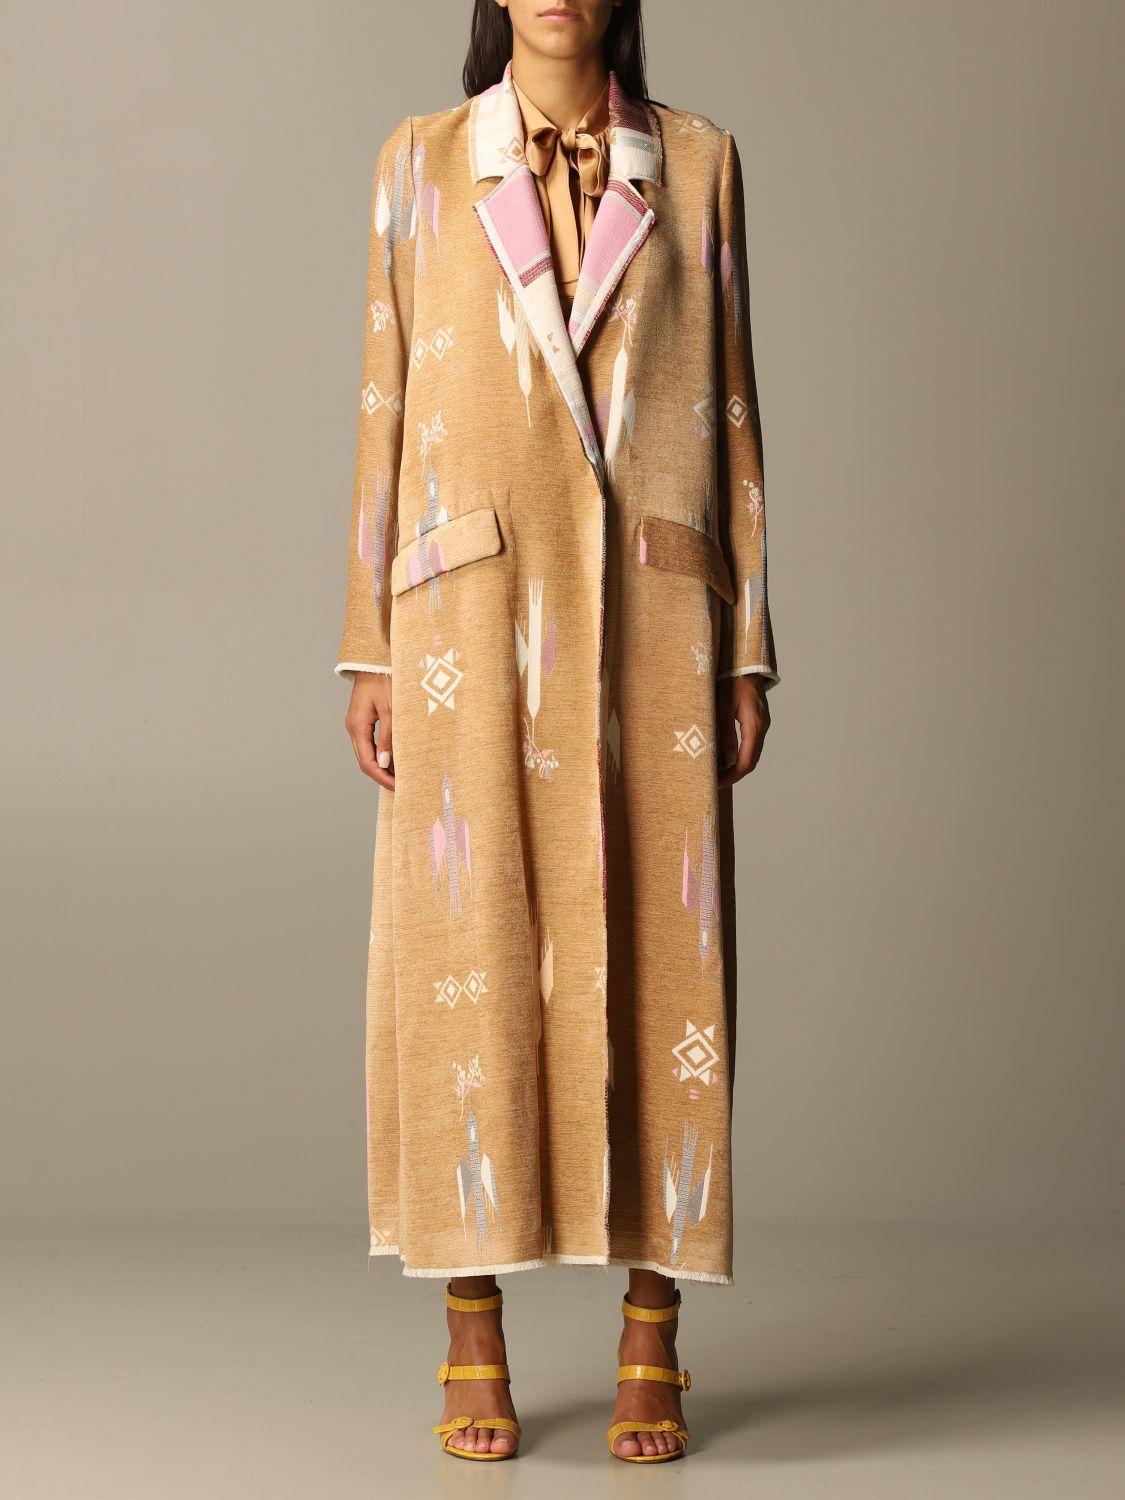 Ontmoedigen ontwikkeling Hoelahoep FORTE FORTE: coat for woman - Camel | Forte Forte coat 7502 online on  GIGLIO.COM